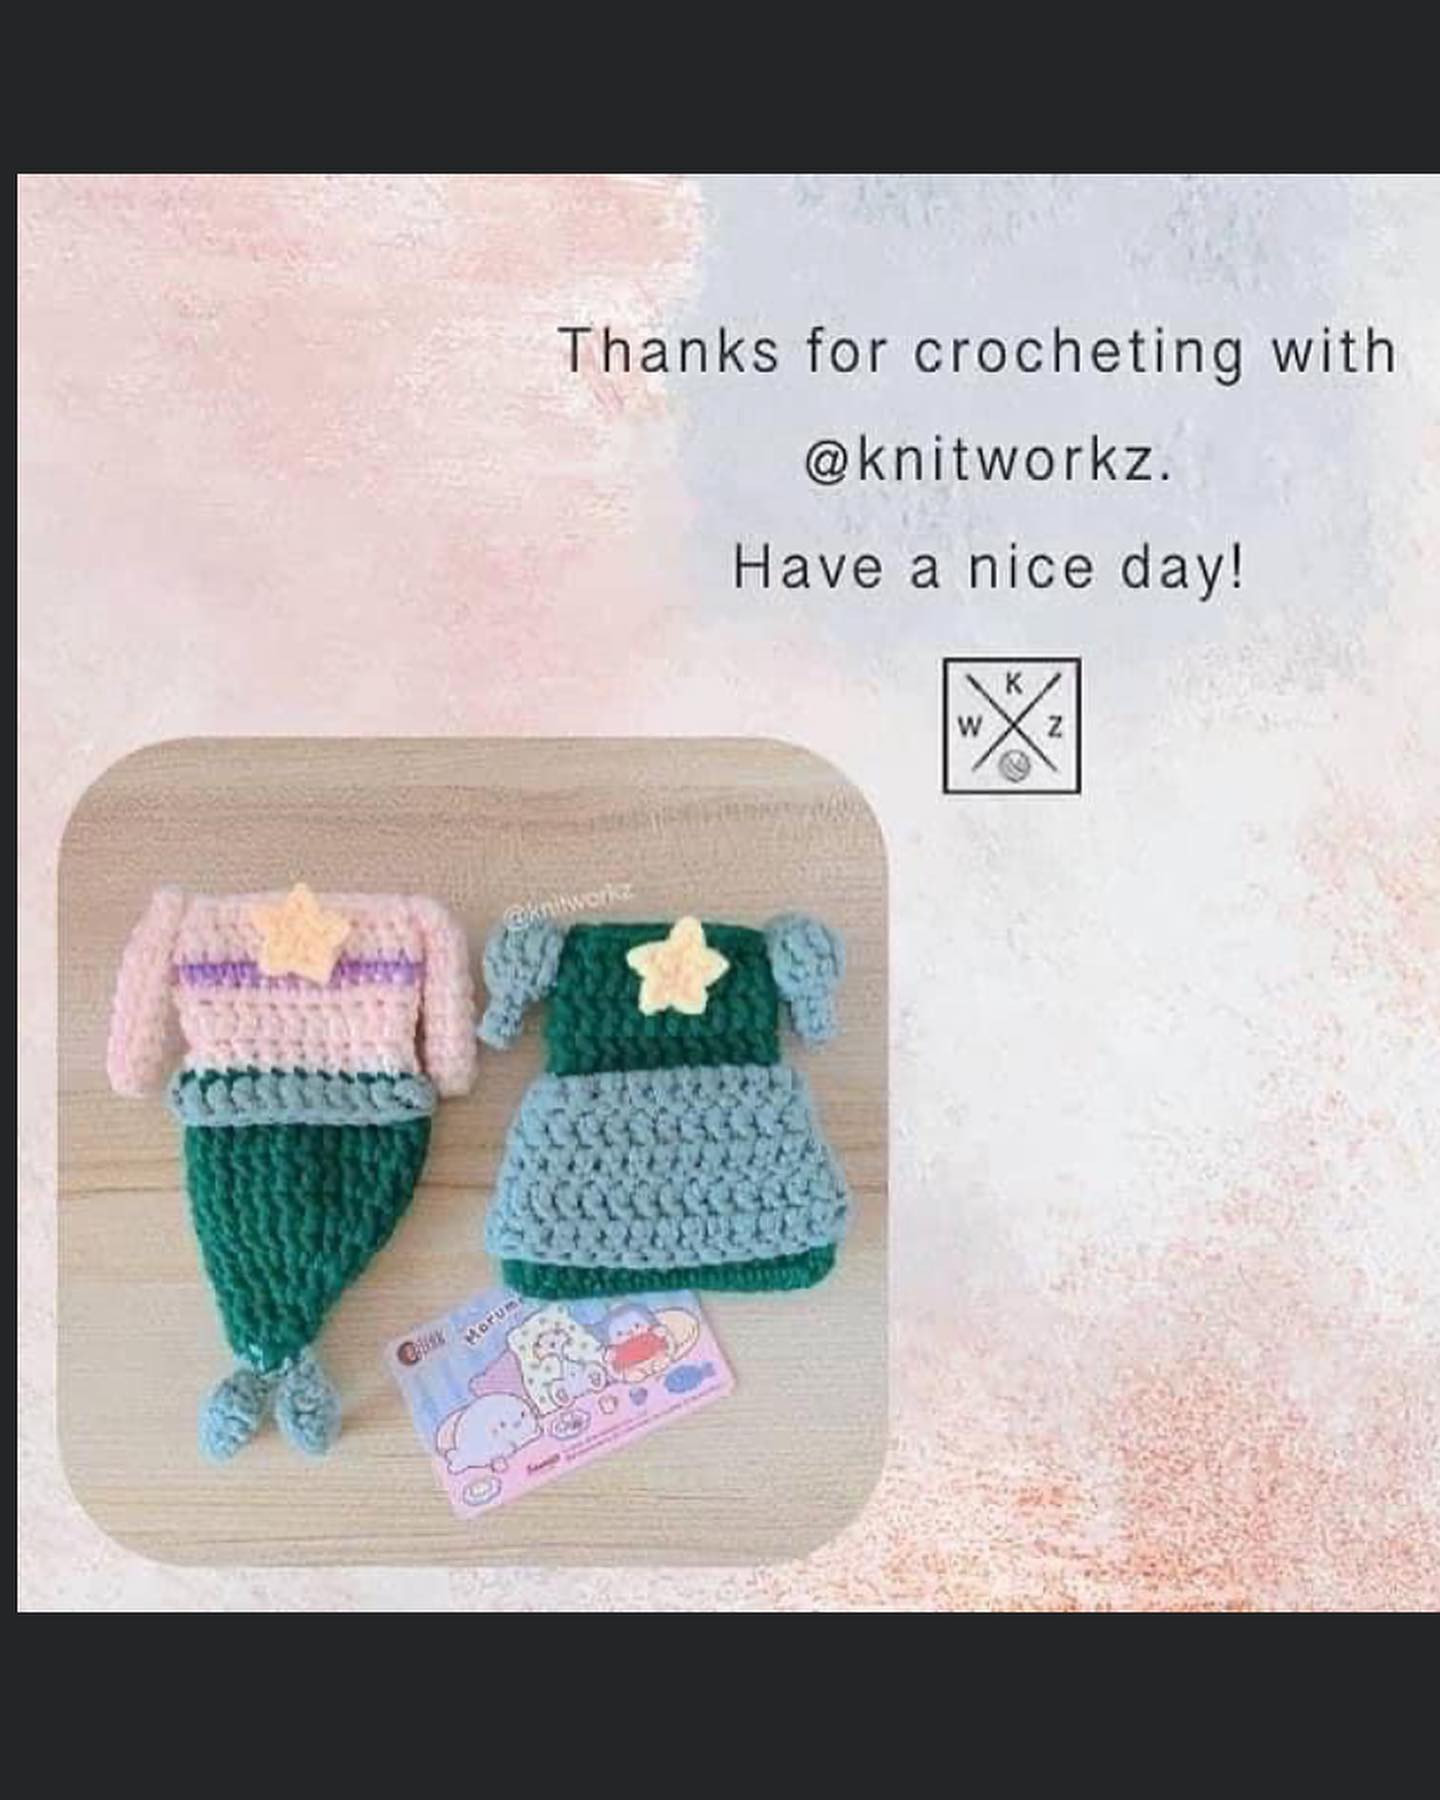 Mermaid tail crochet pattern